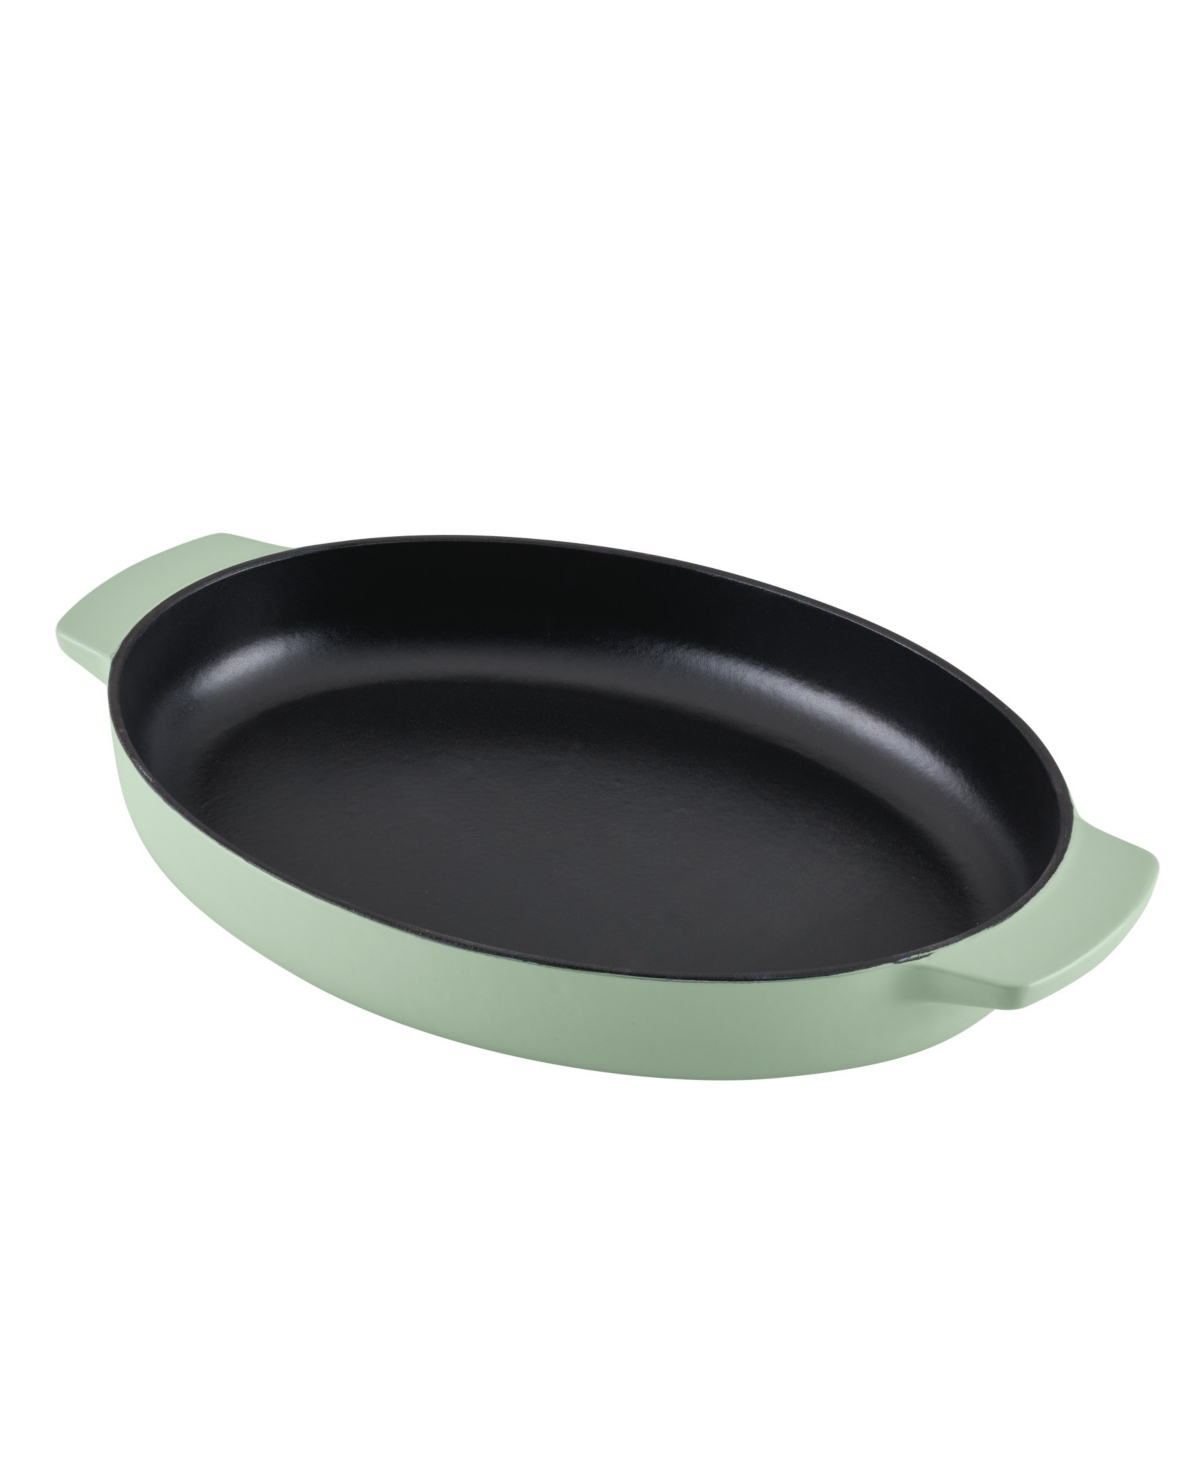 Kitchenaid Enameled Cast Iron 2.5 Quart Au Gratin Roasting Pan In Pistachio